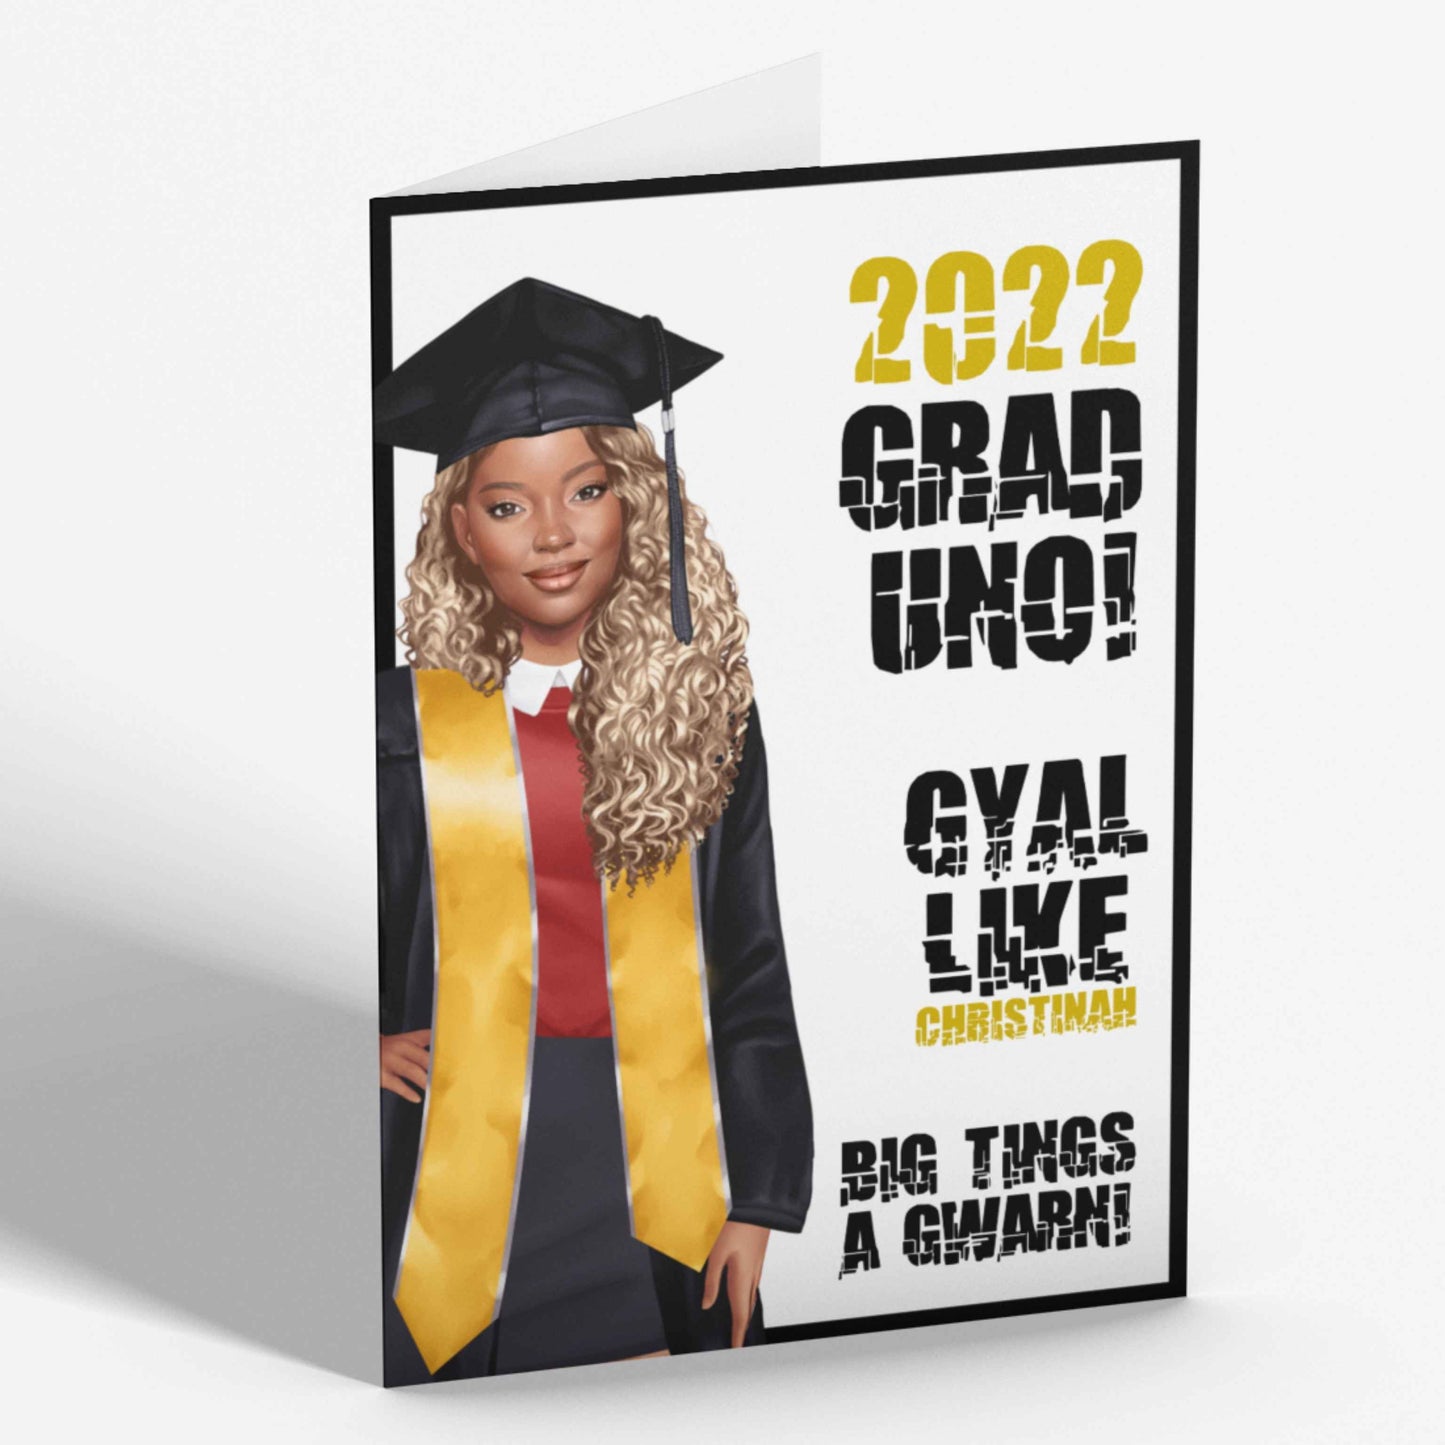 Personalised Graduation Card | Black Girl Graduate | Gyal Like